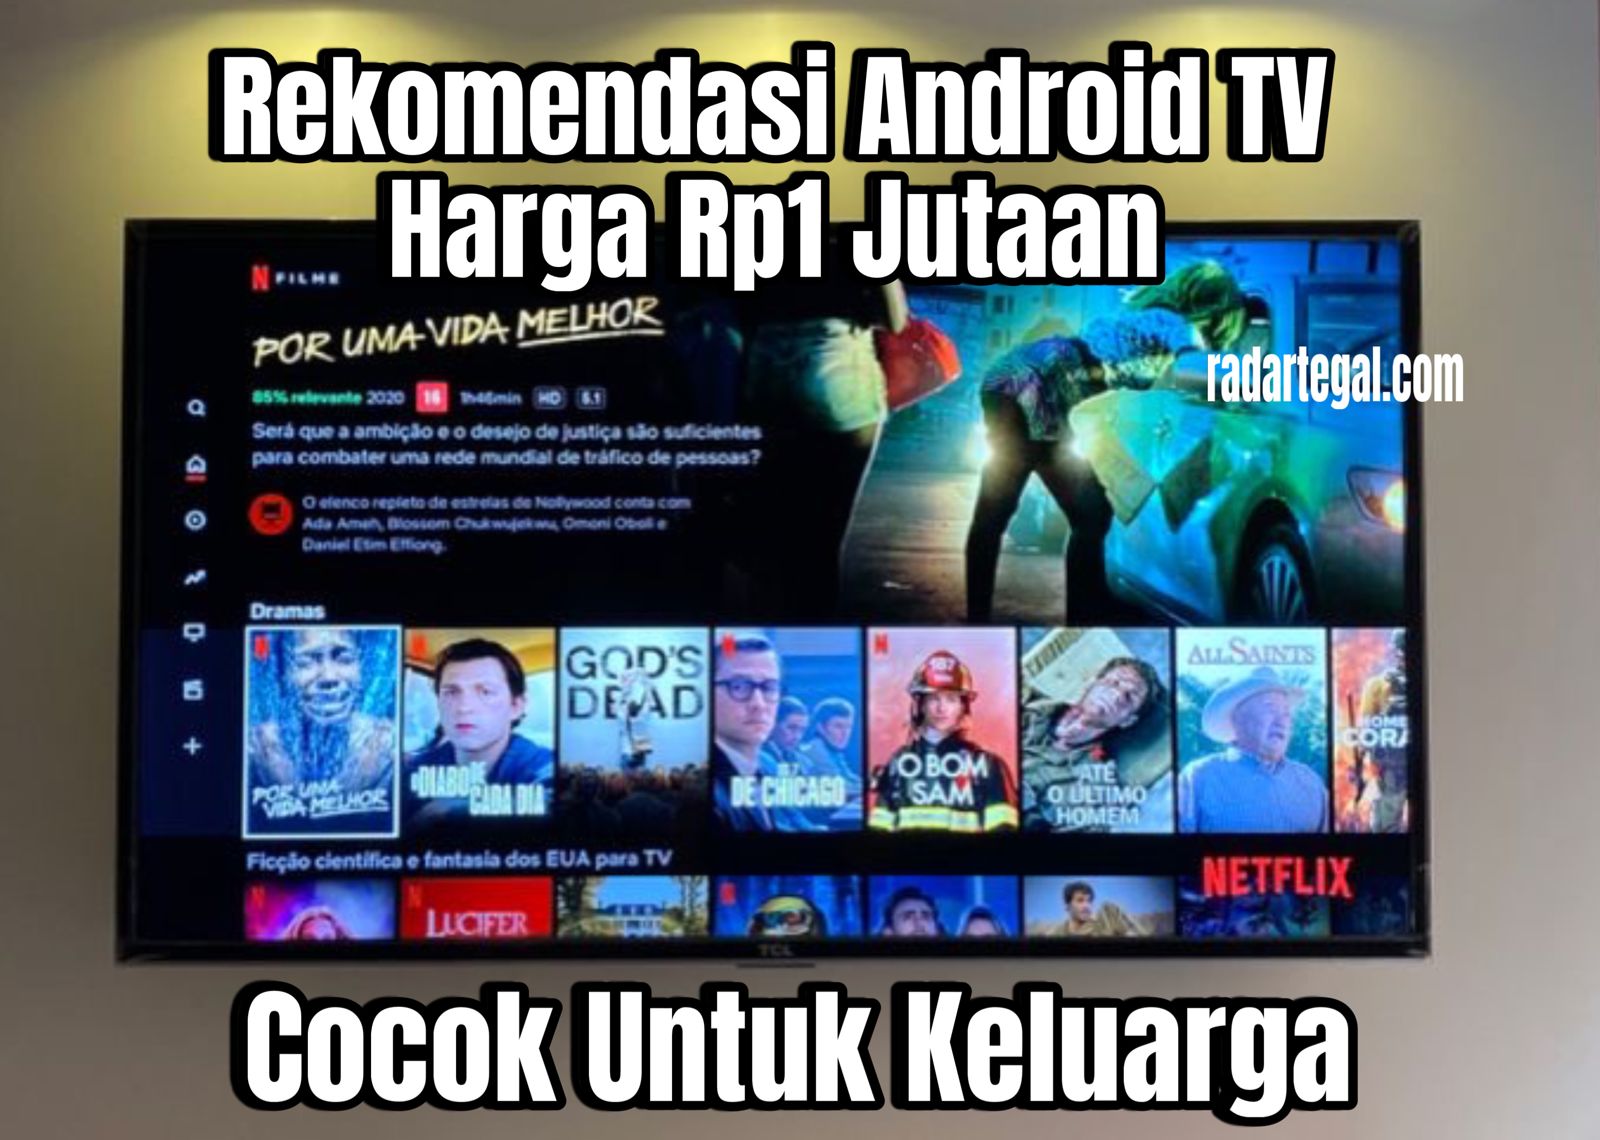 Kualitasnya Bukan Kaleng-Kaleng, Ini Rekomendasi Android TV Harga Rp1 Jutaan yang Laris di Pasaran 